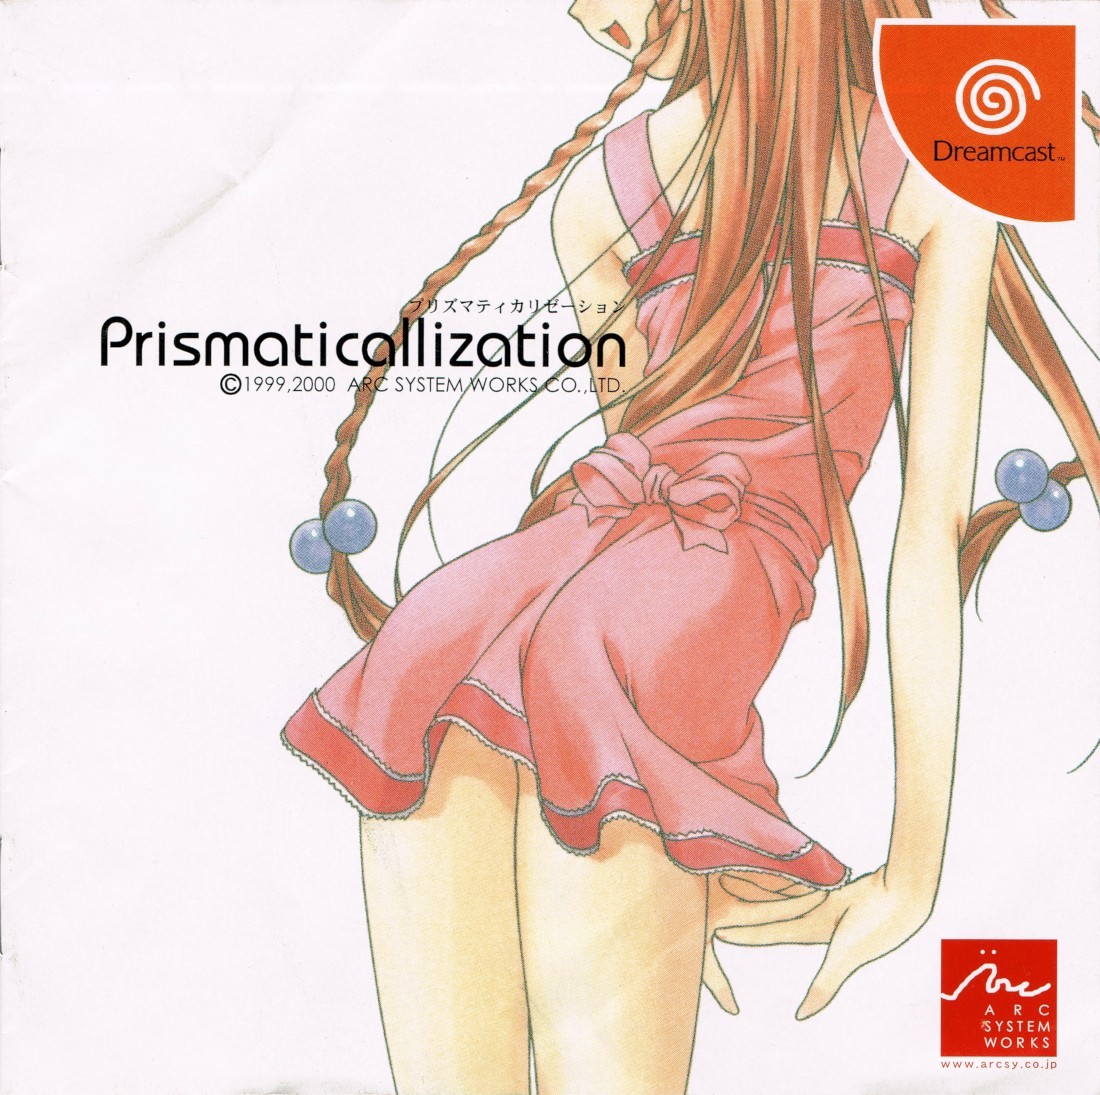 Capa do jogo Prismaticallization